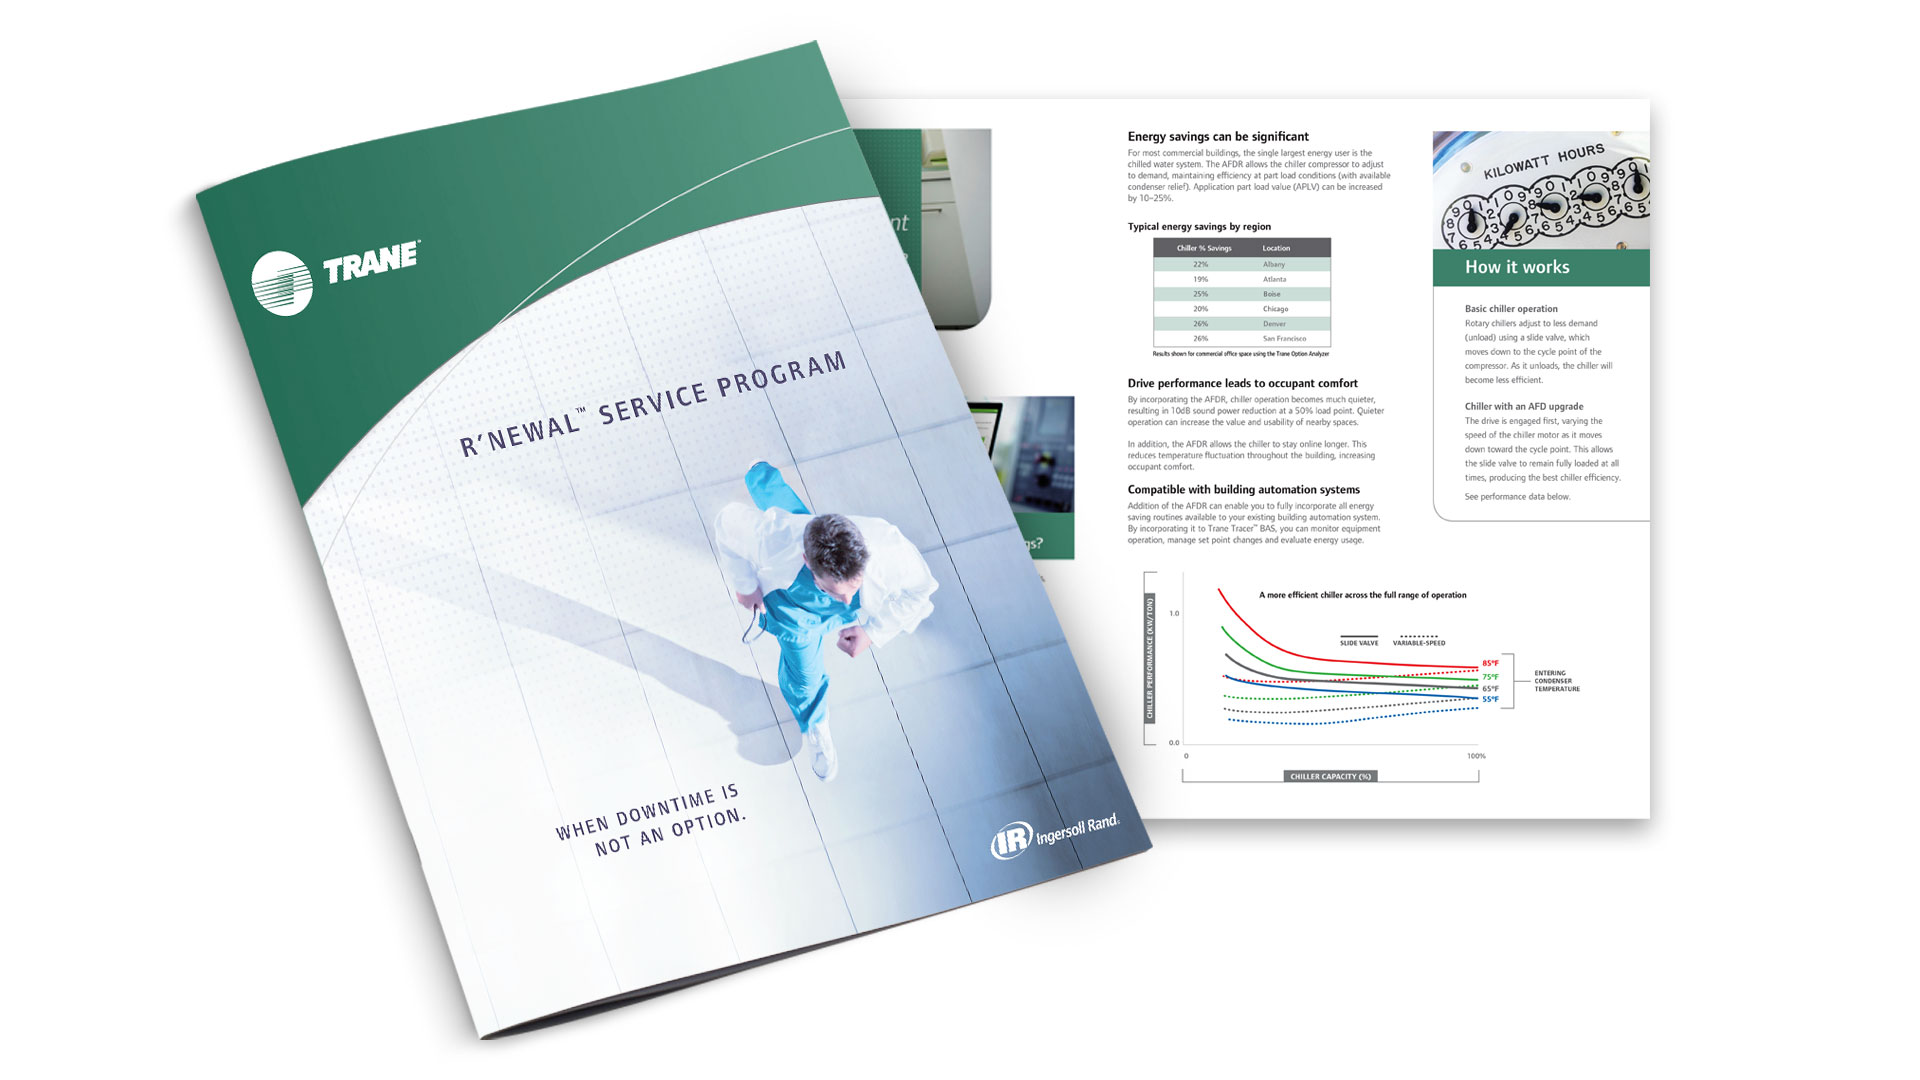 Ingersoll Rand Trane R’newal service program brochure created by Vendi Advertising